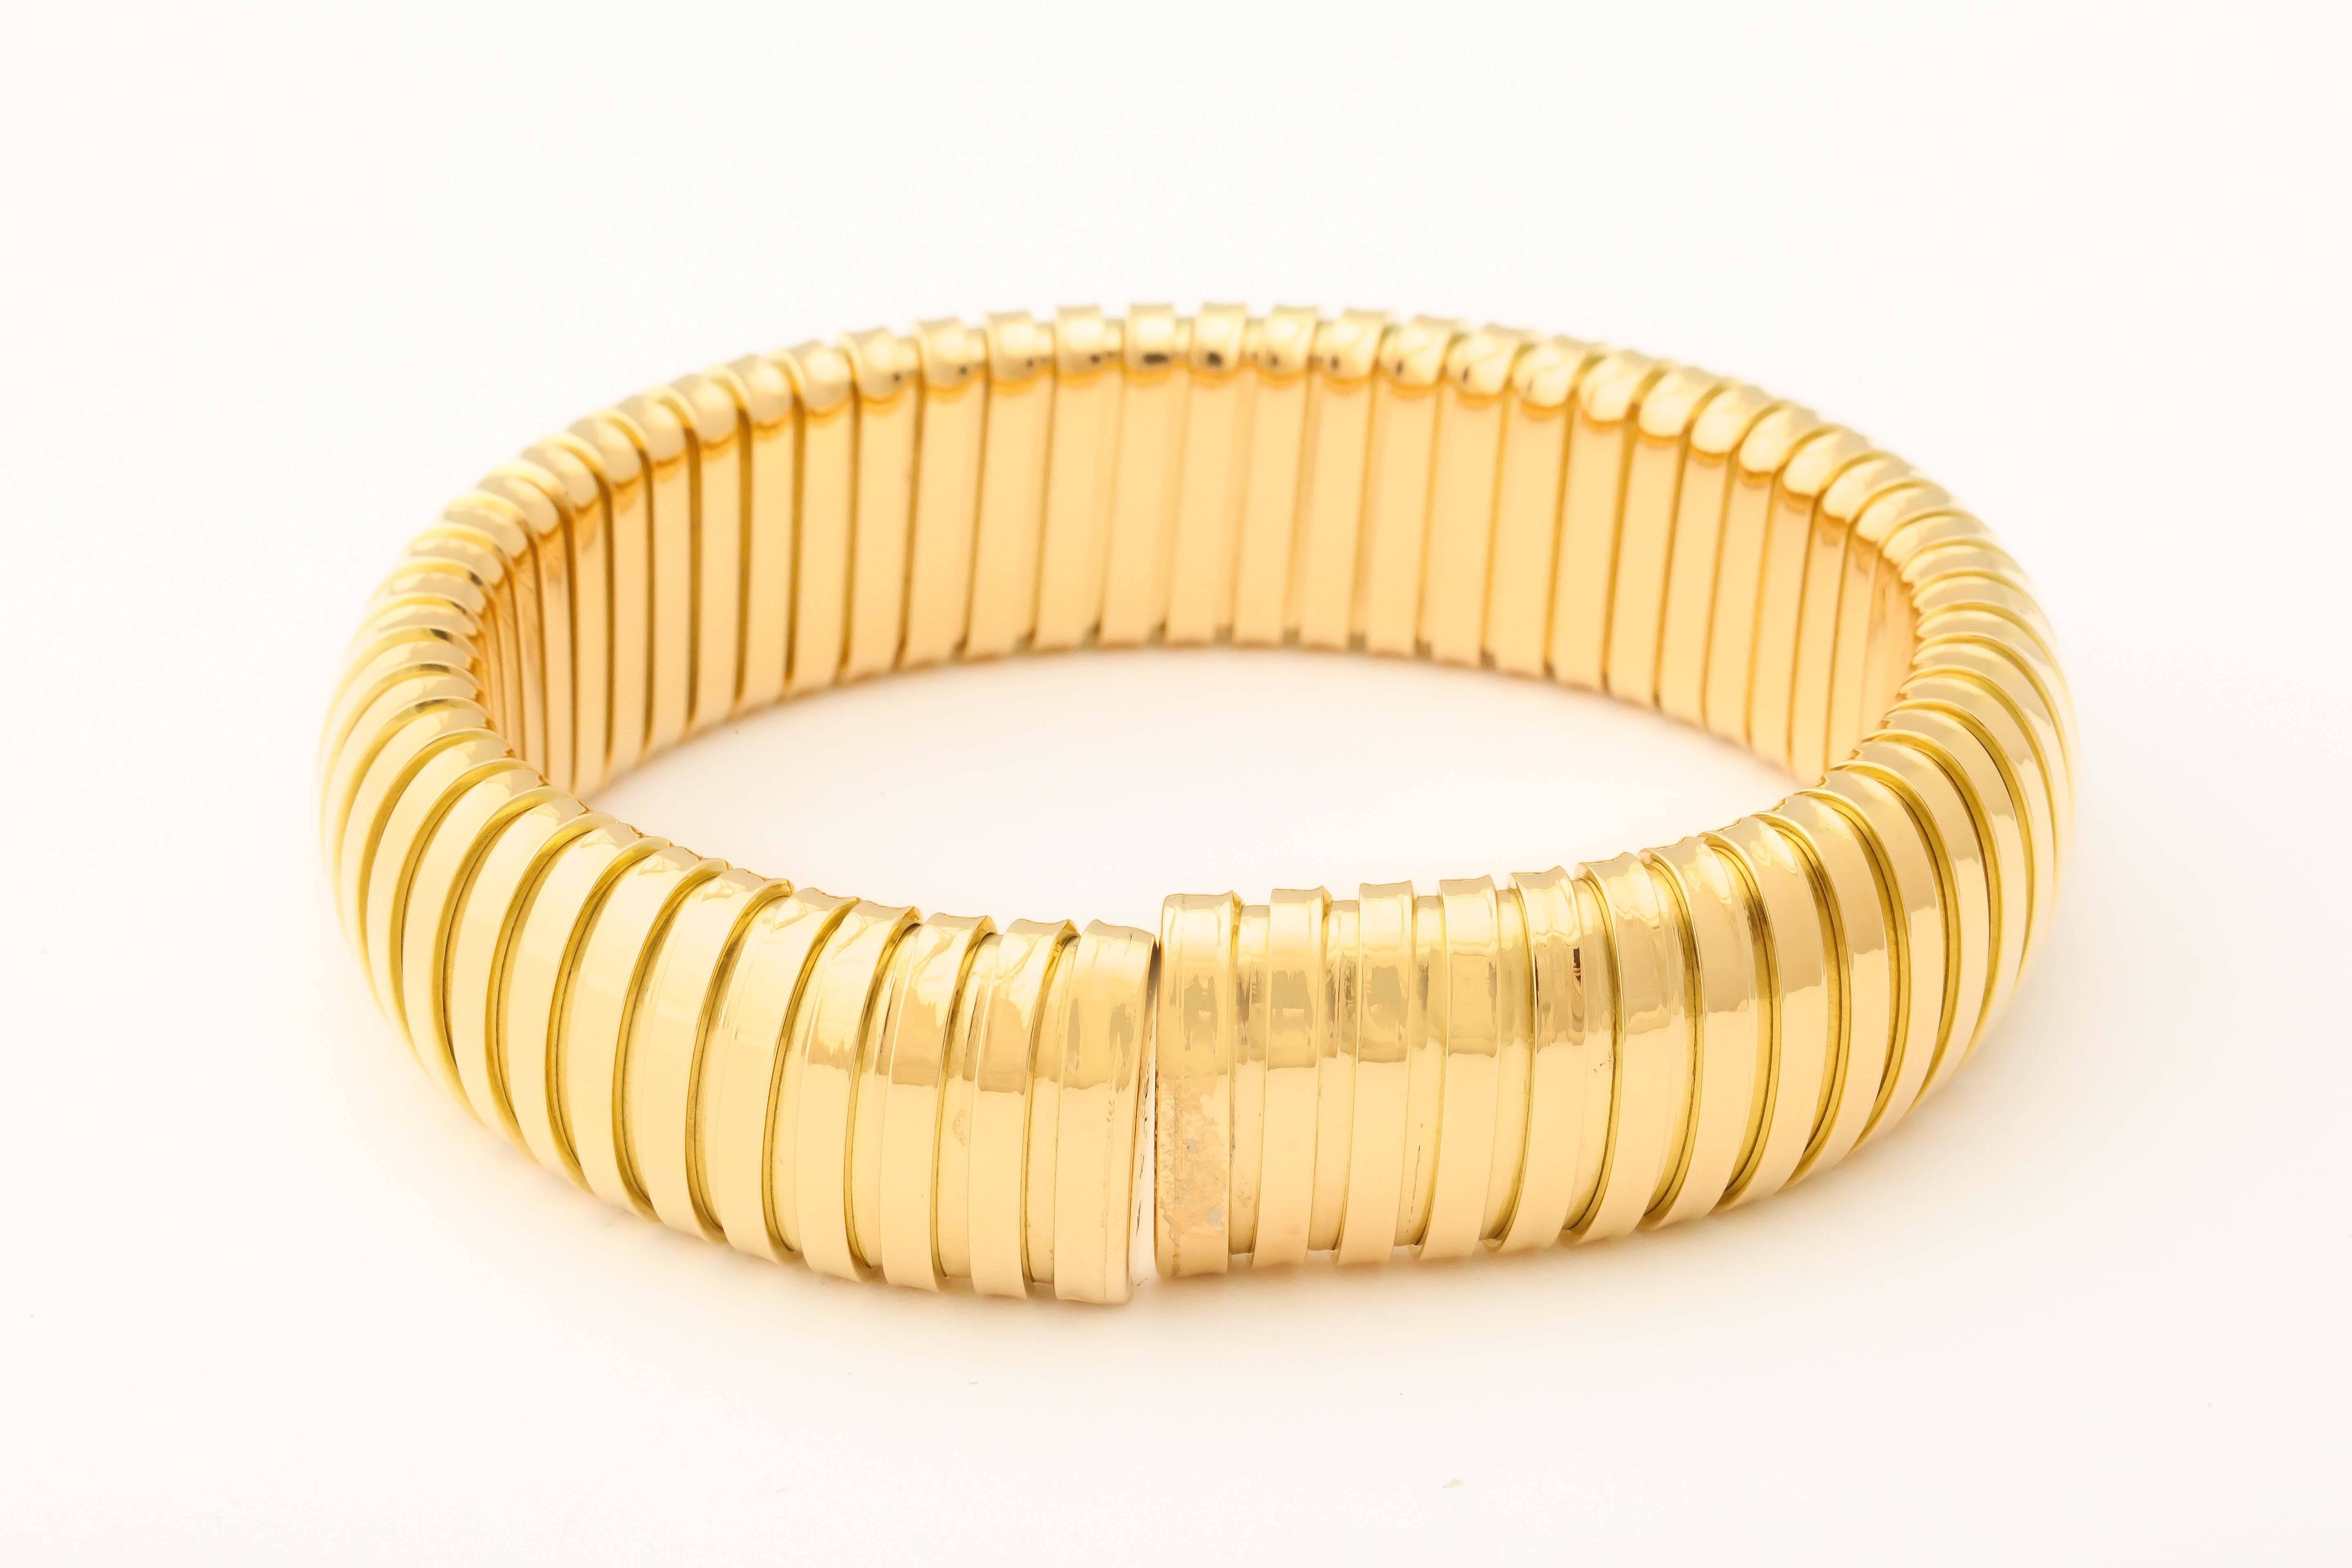 18k Yellow gold Tubogas spring loaded bracelet  16mm wide 7.25 deep
17 cm circumference 37.4 grams